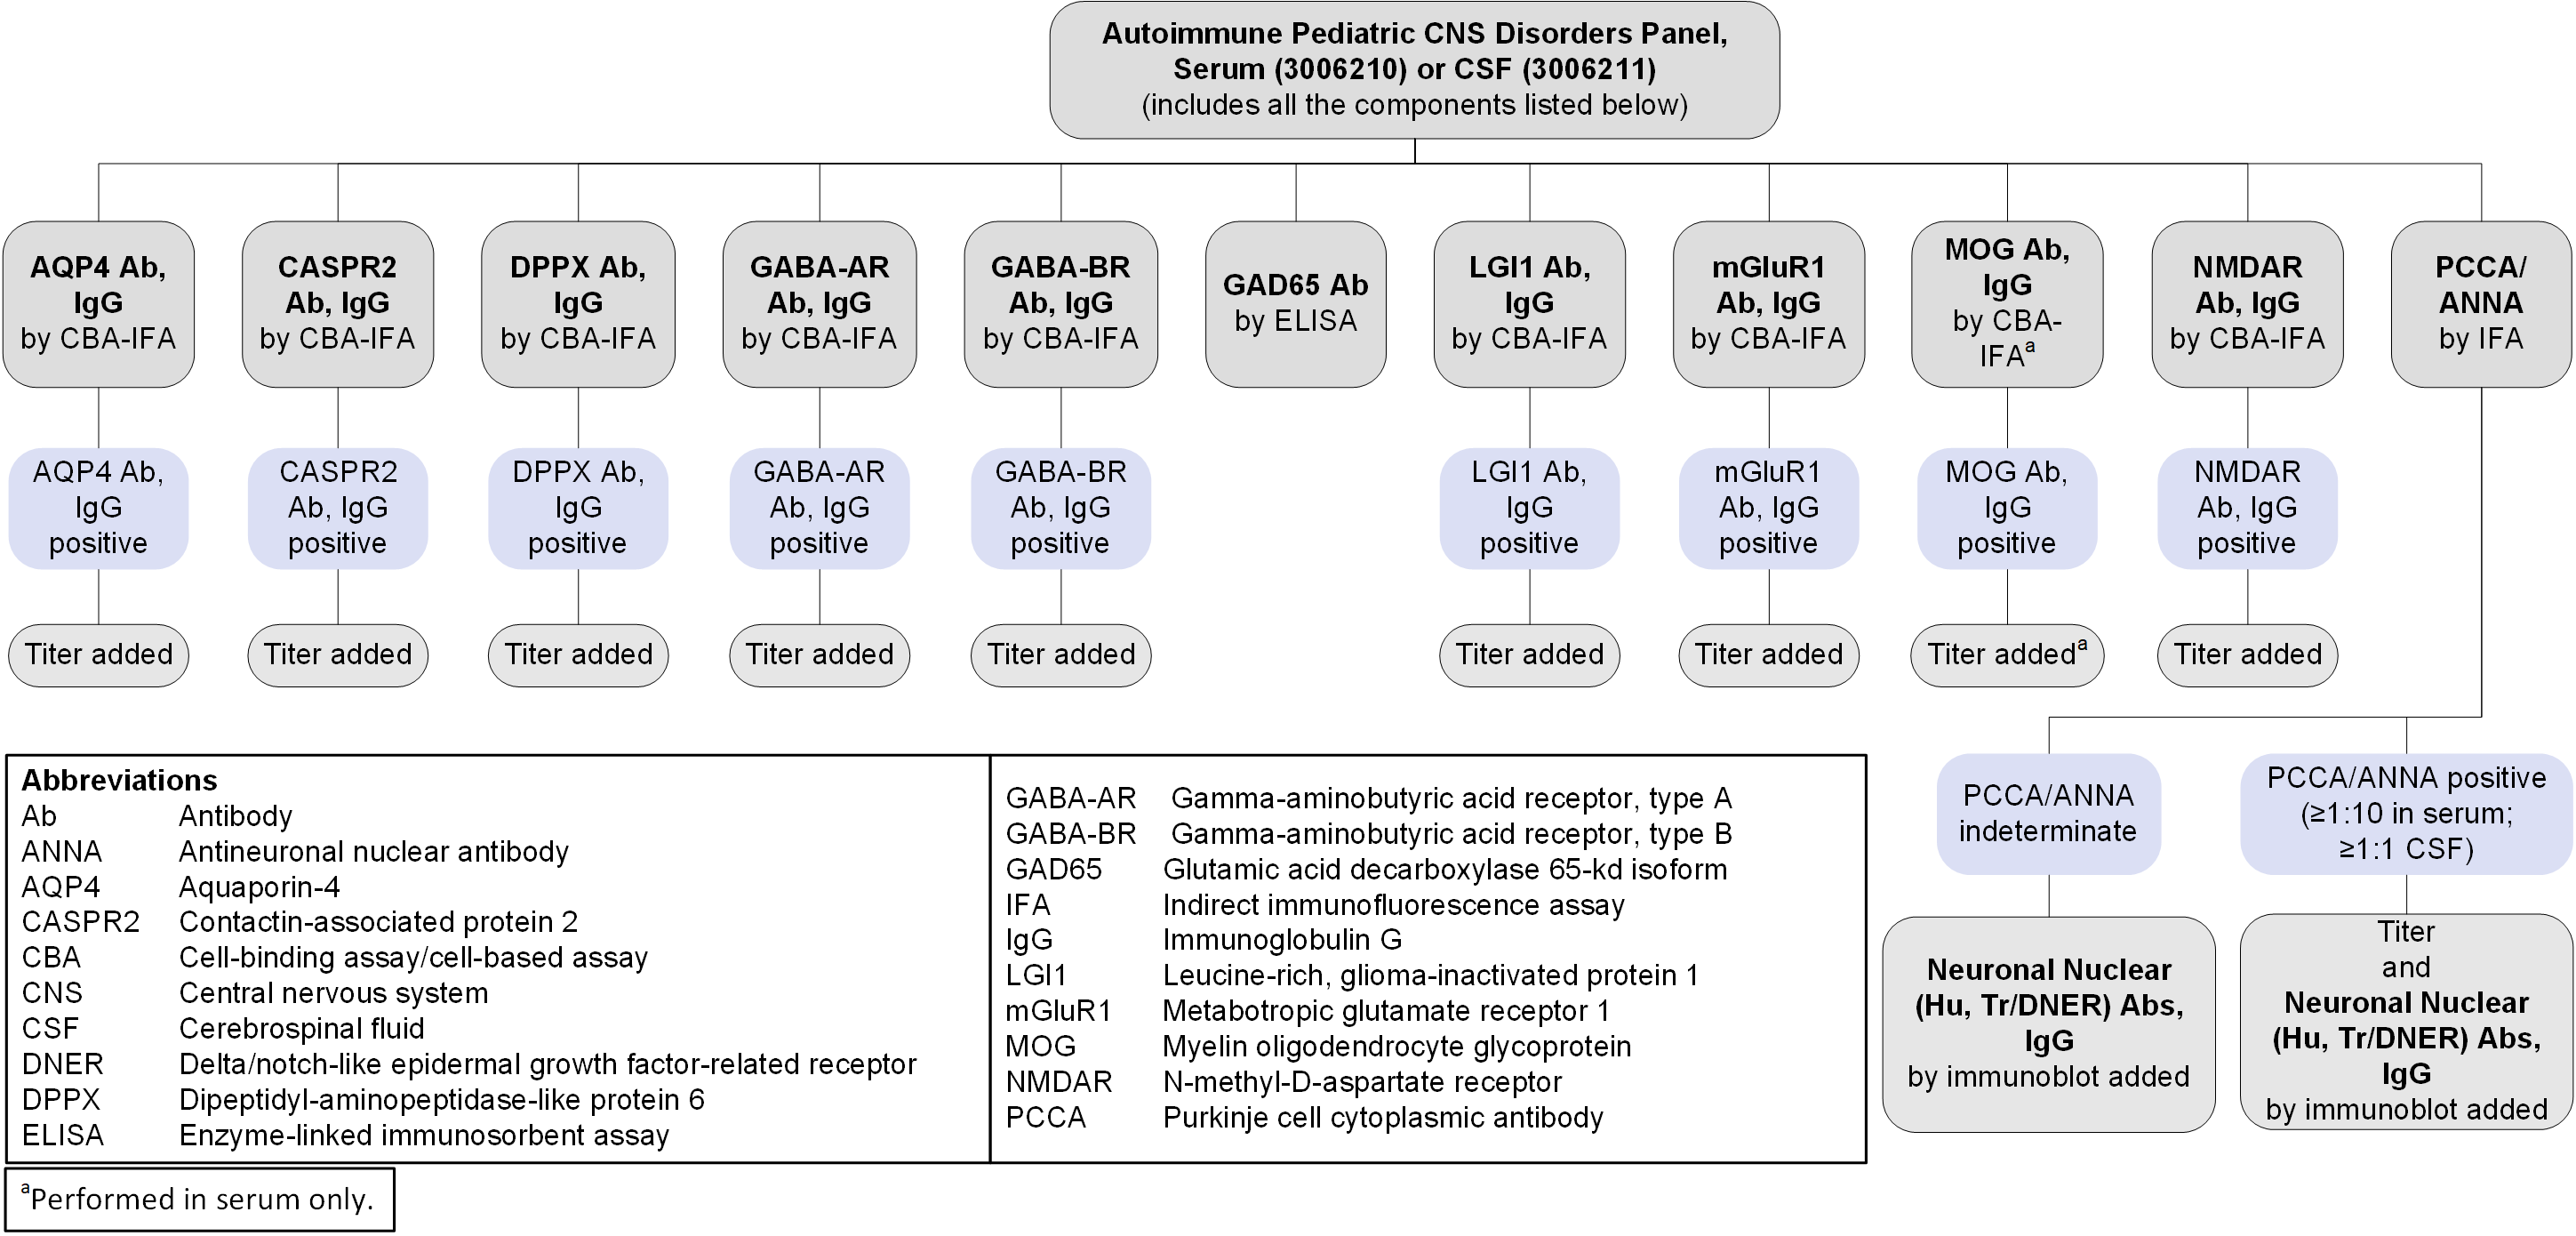 Reflex patterns for Autoimmiune Pediatric CNS Disorders panels